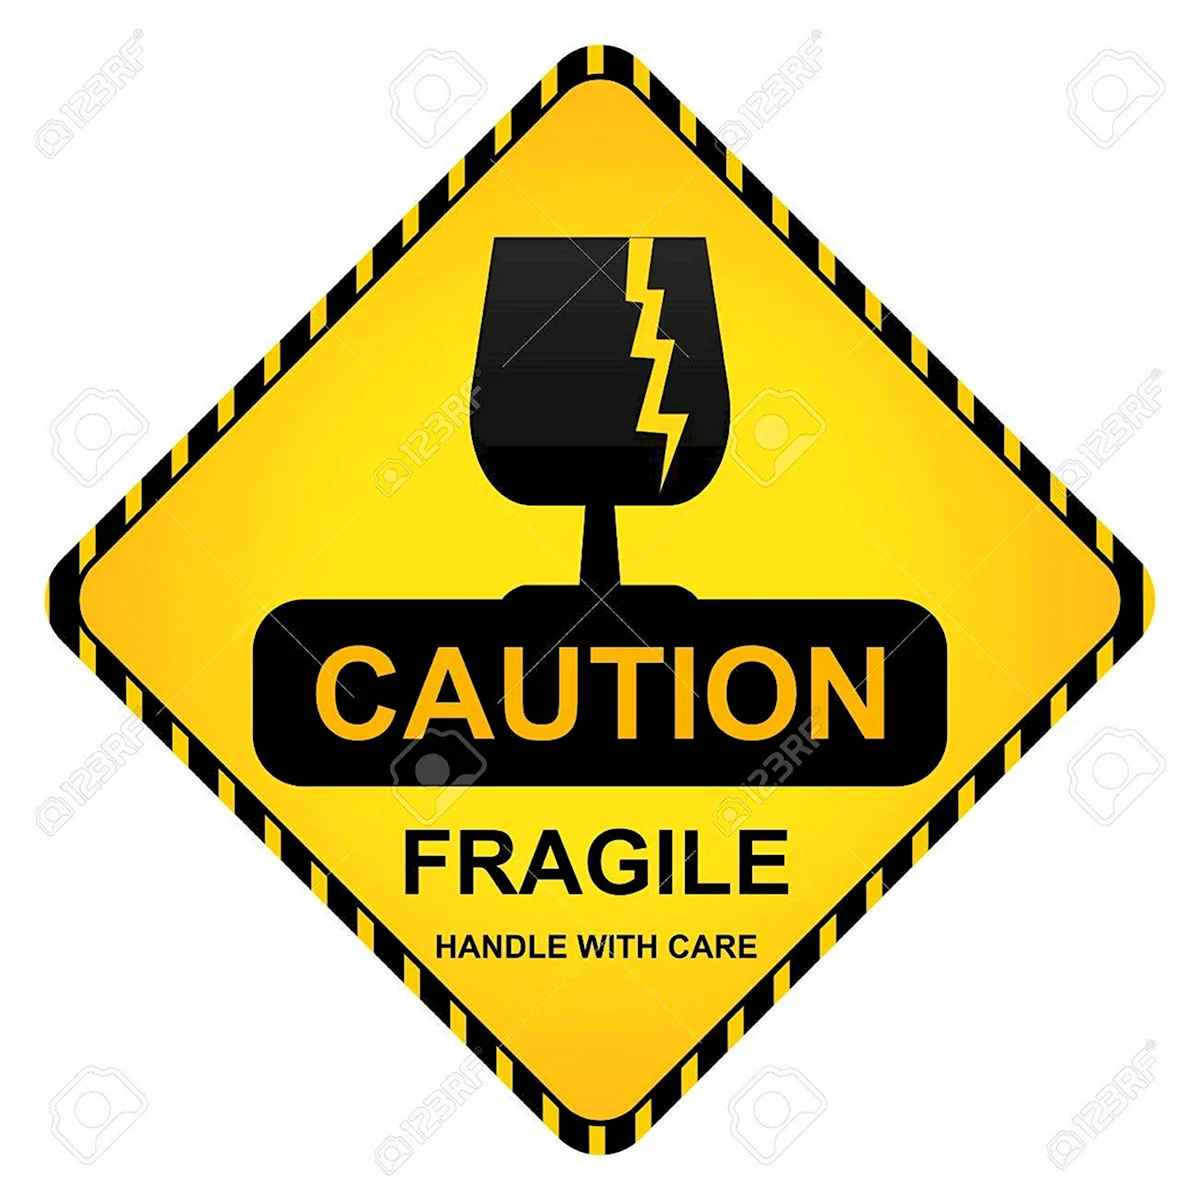 Caution fragile